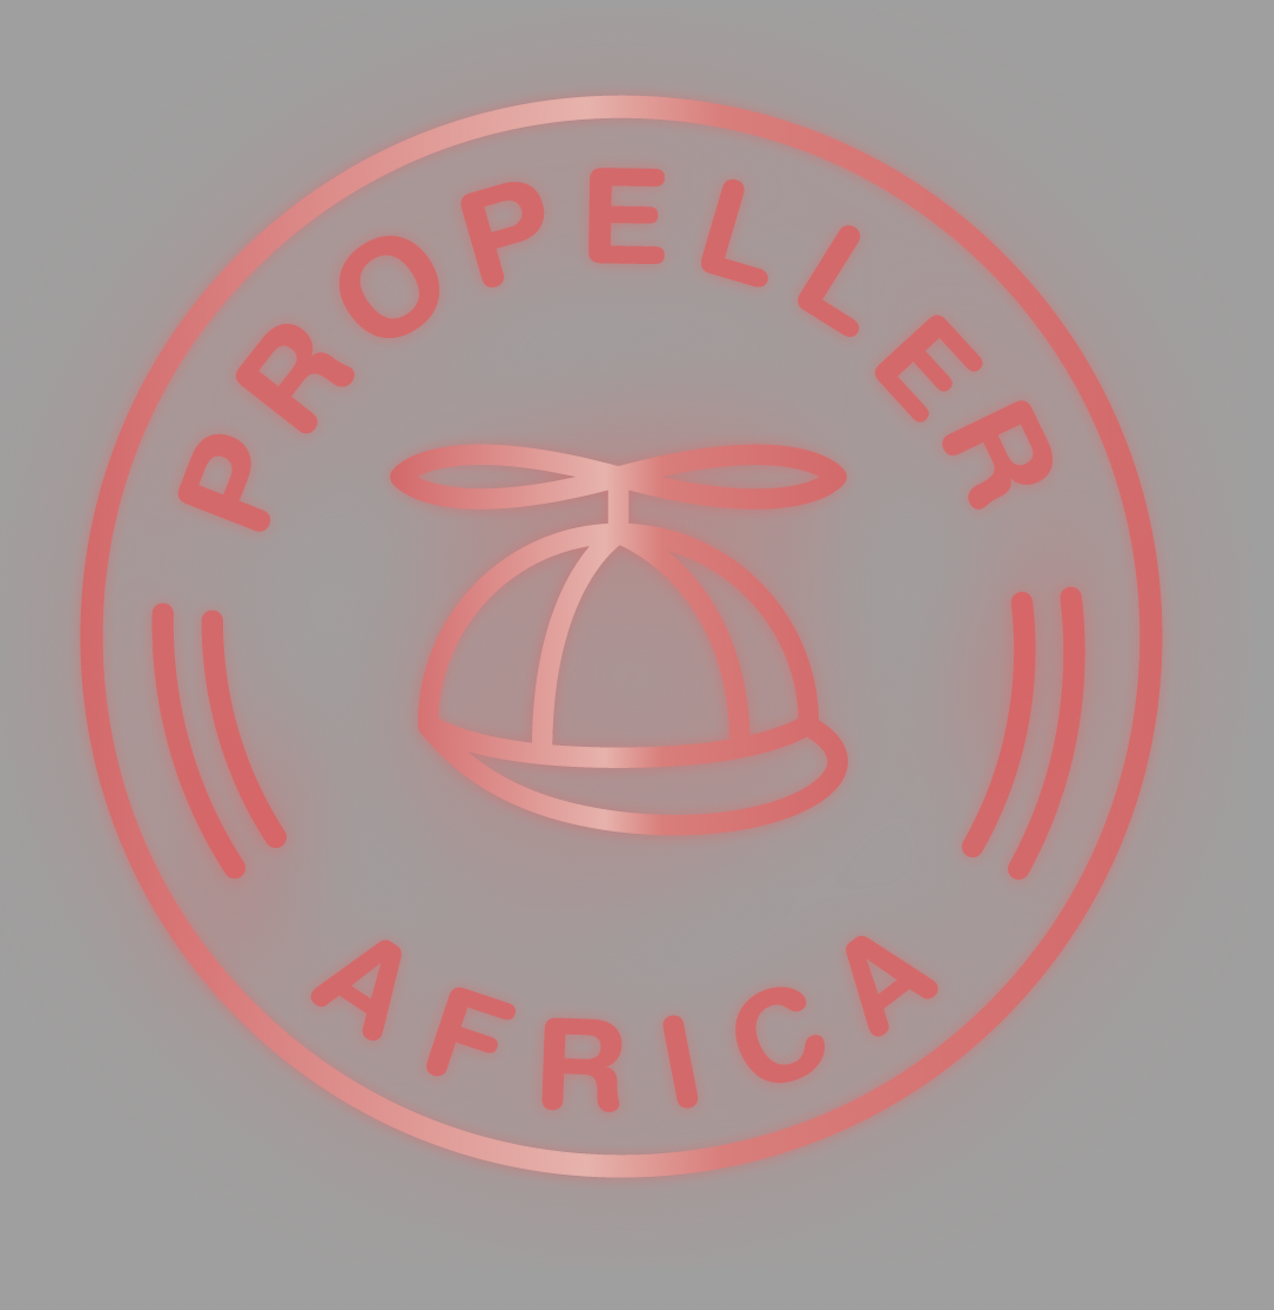 Propeller Film Services